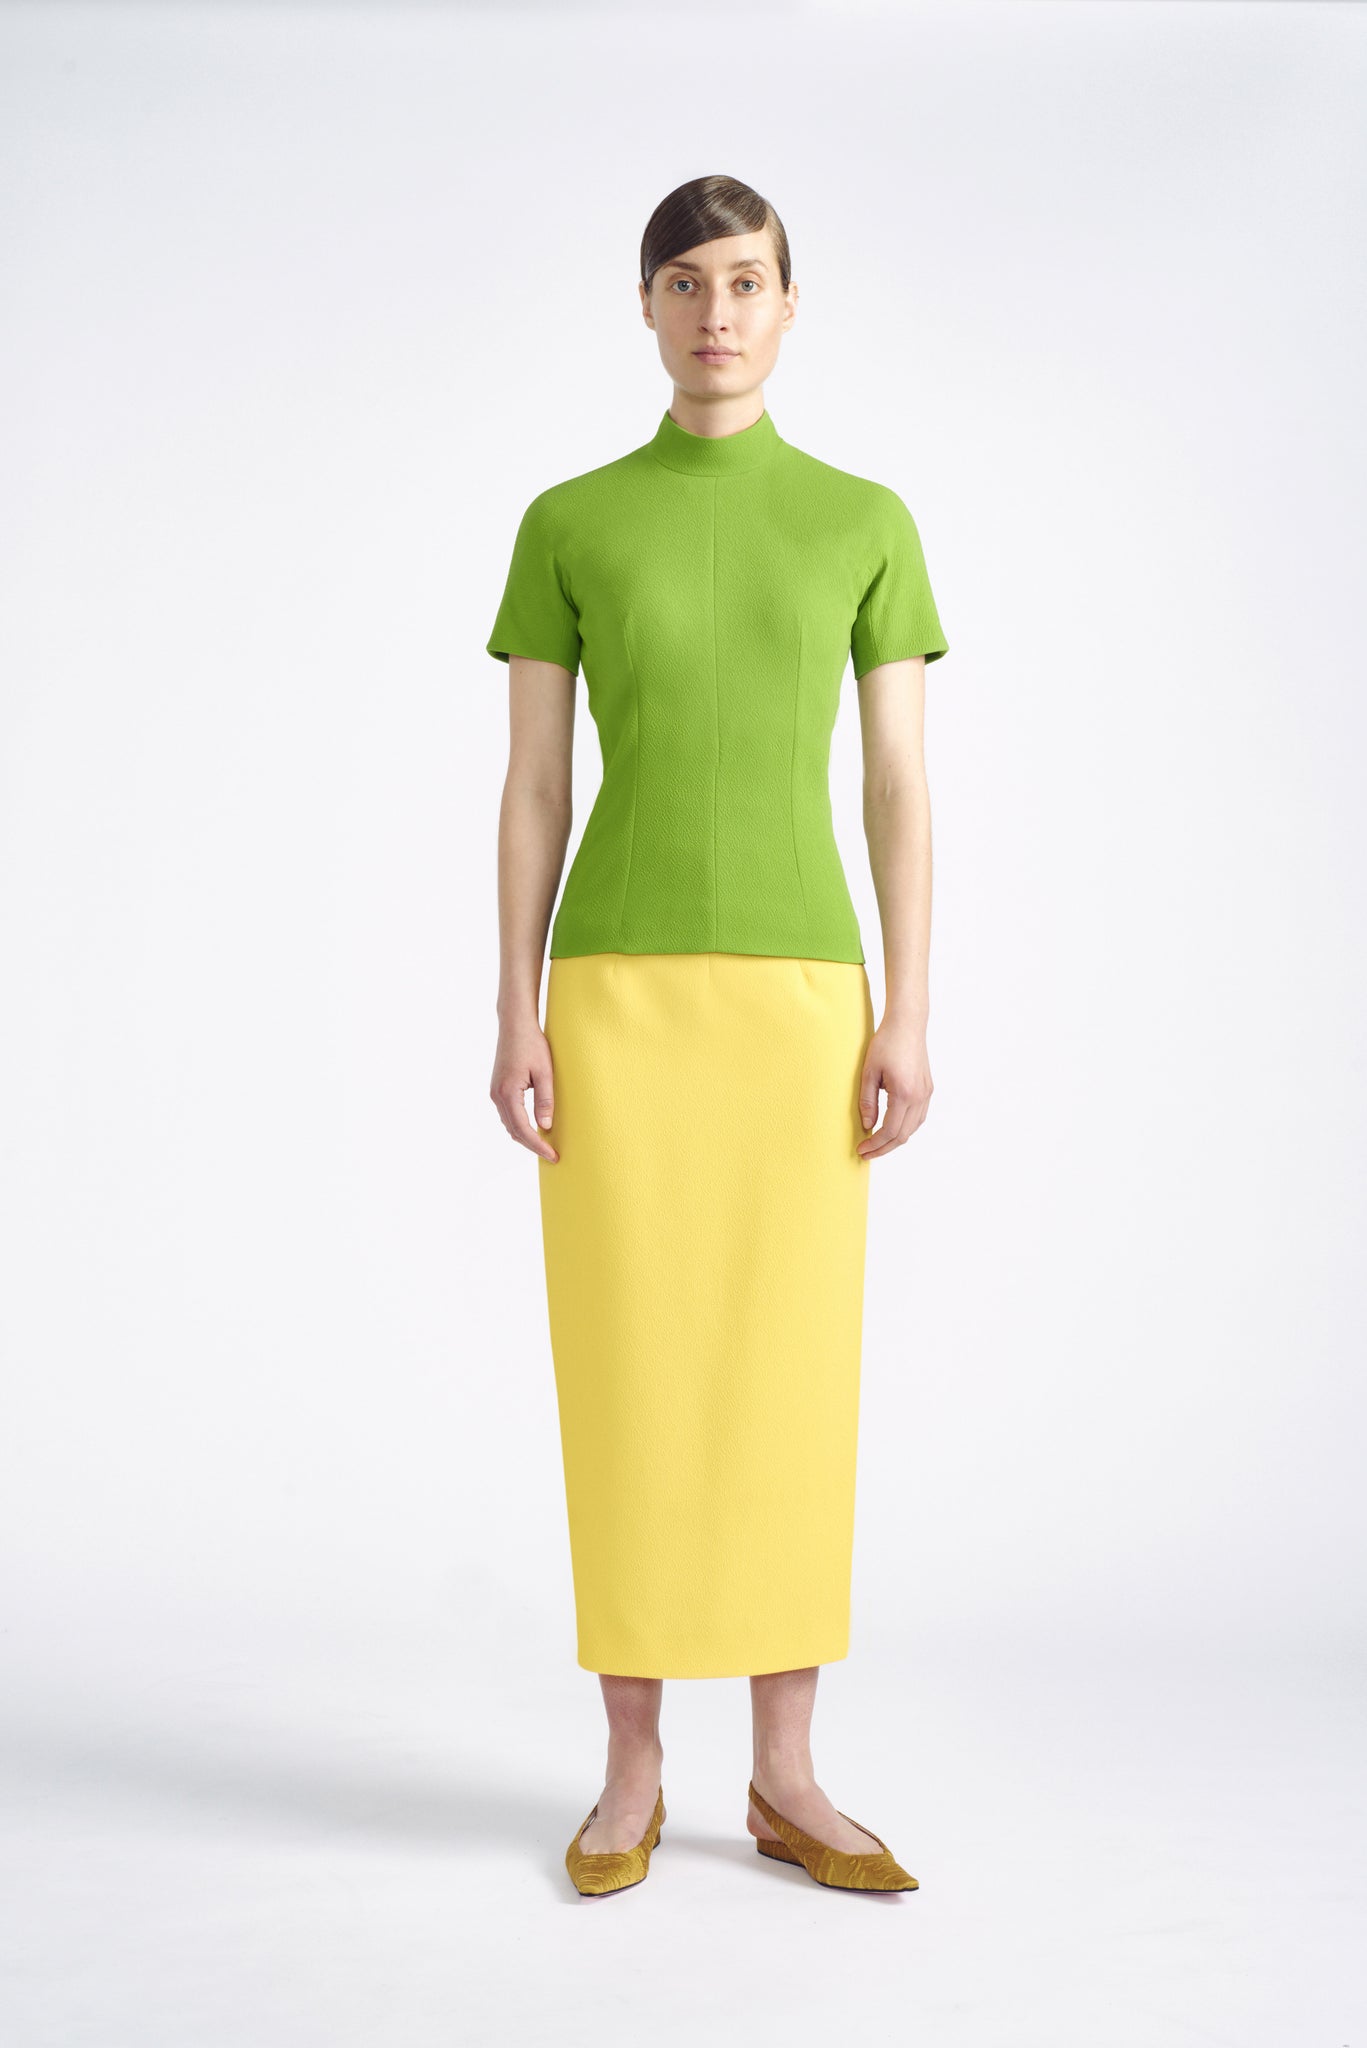 Lorelei Skirt | Yellow Crepe Pencil Skirt  | Emilia Wickstead